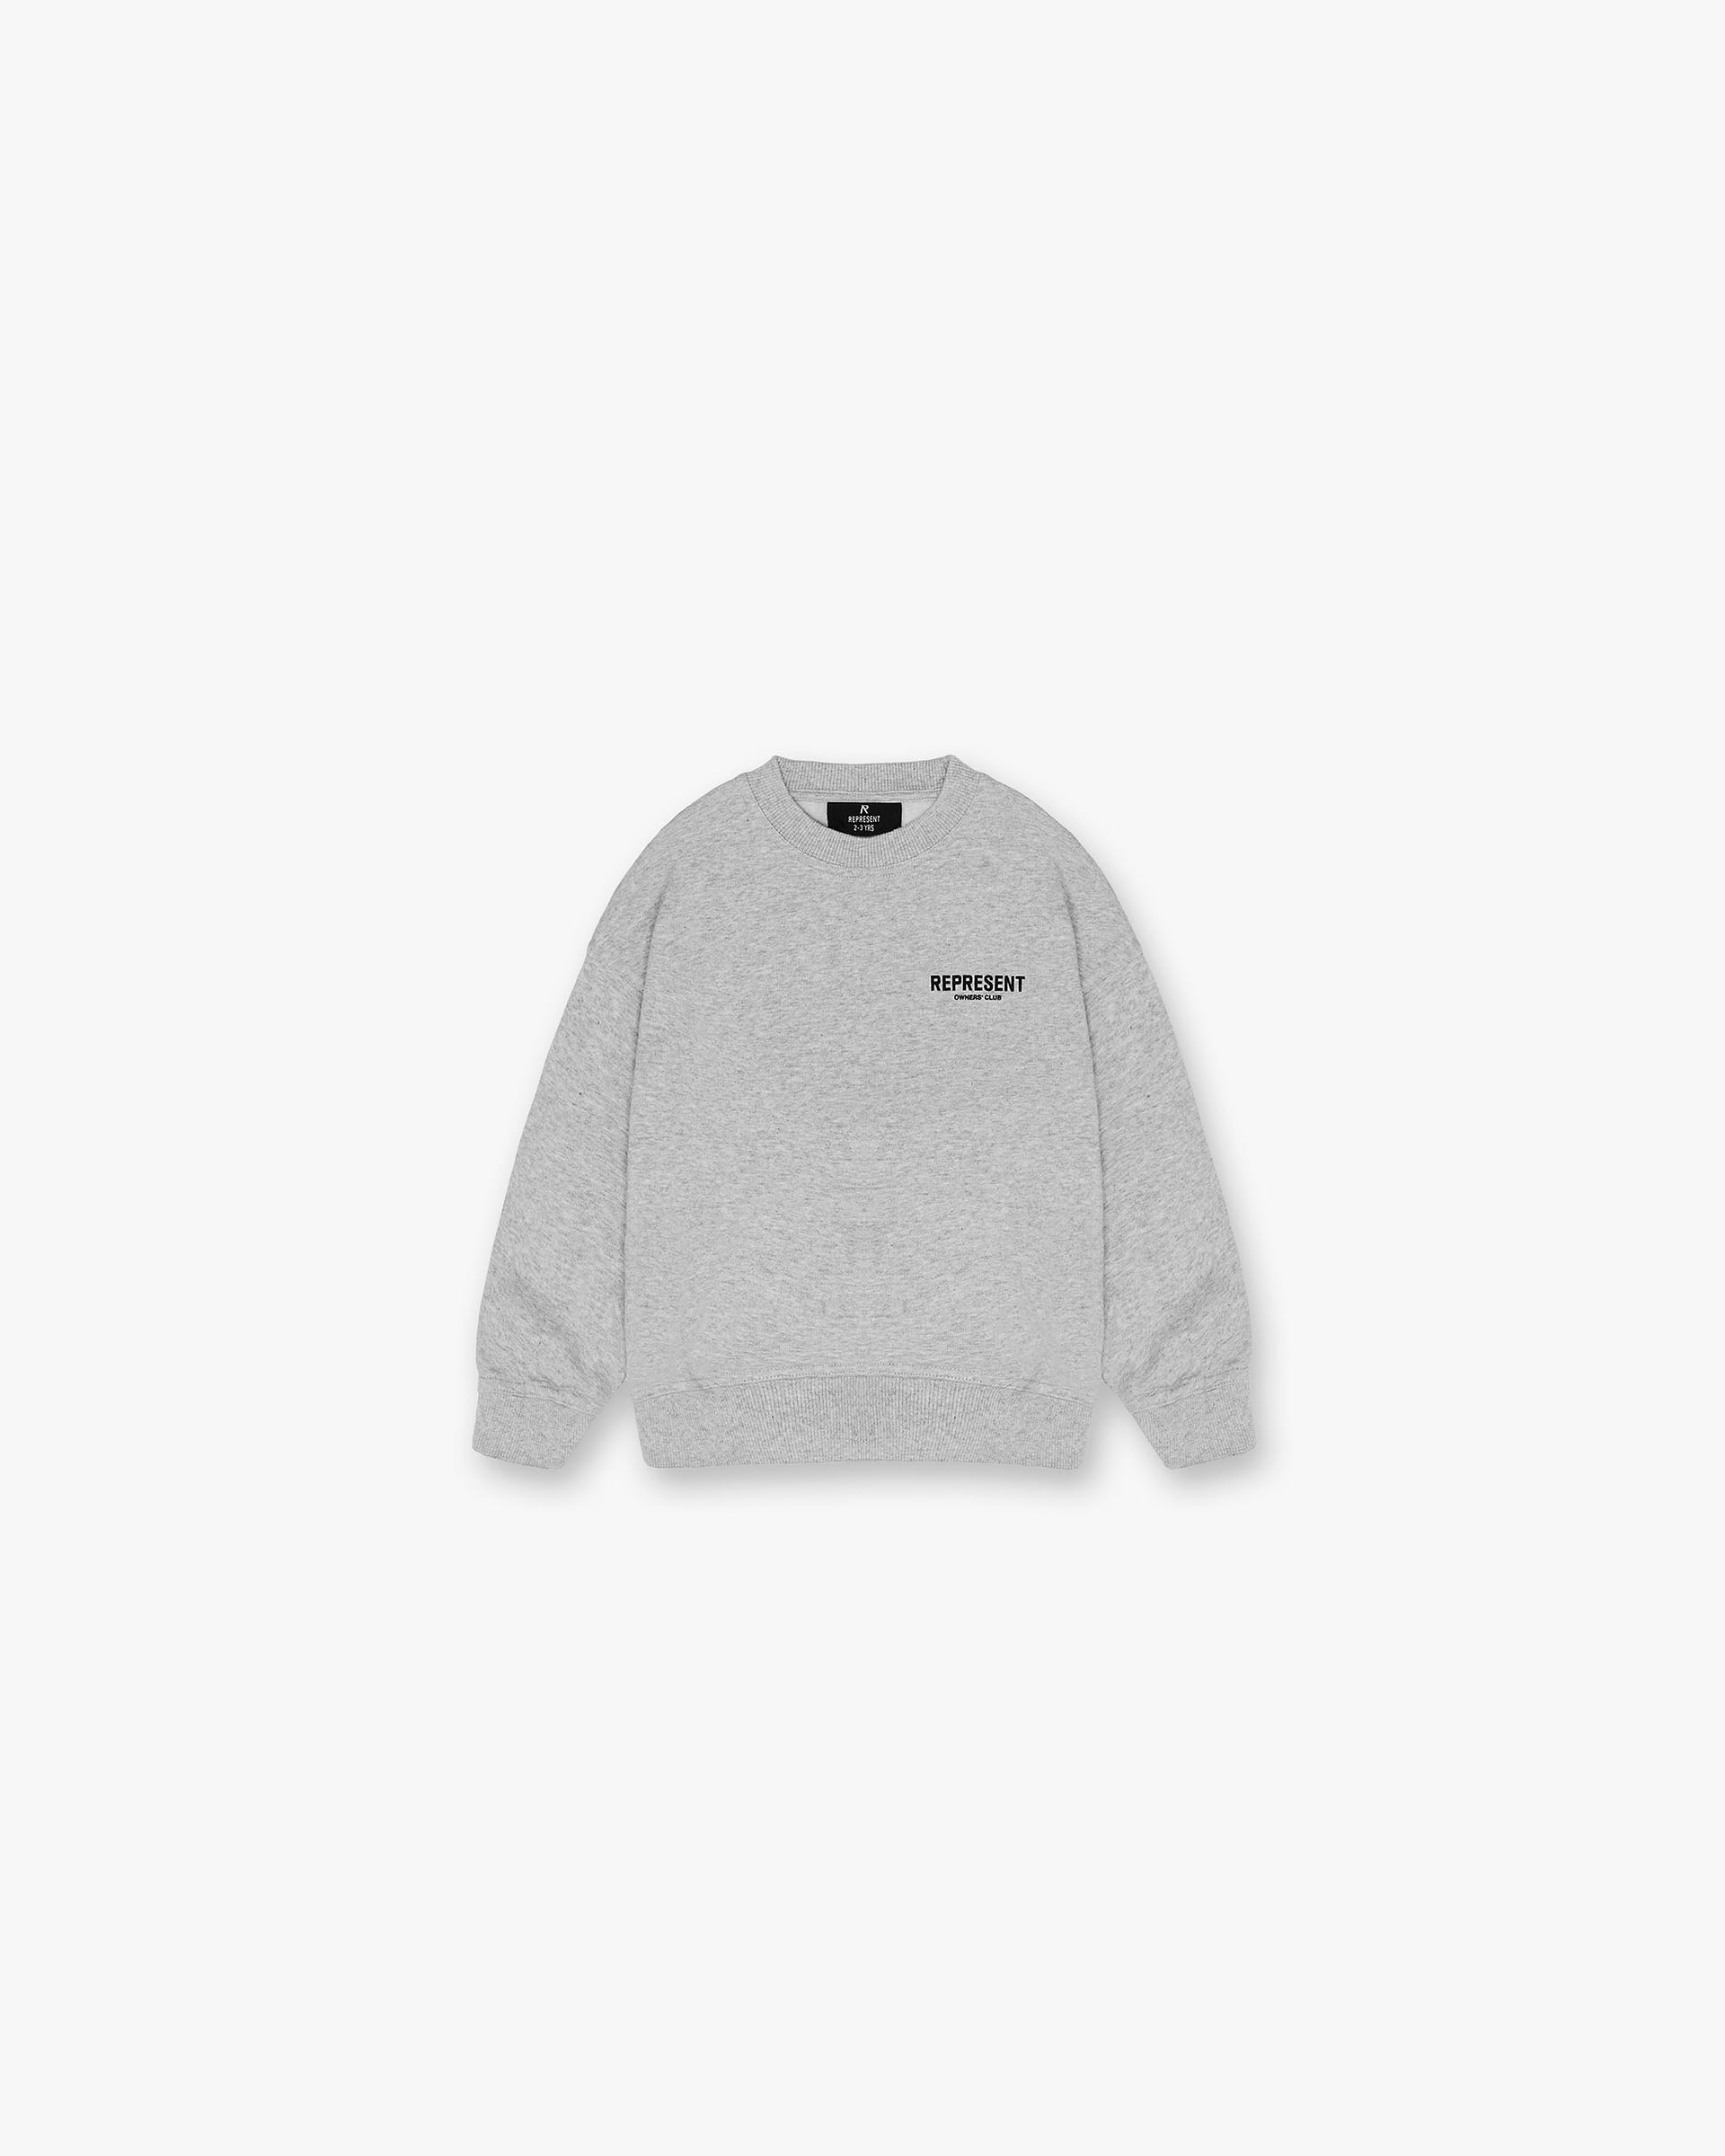 Represent Mini Owners Club Sweater | Ash Grey Sweaters Owners Club | Represent Clo